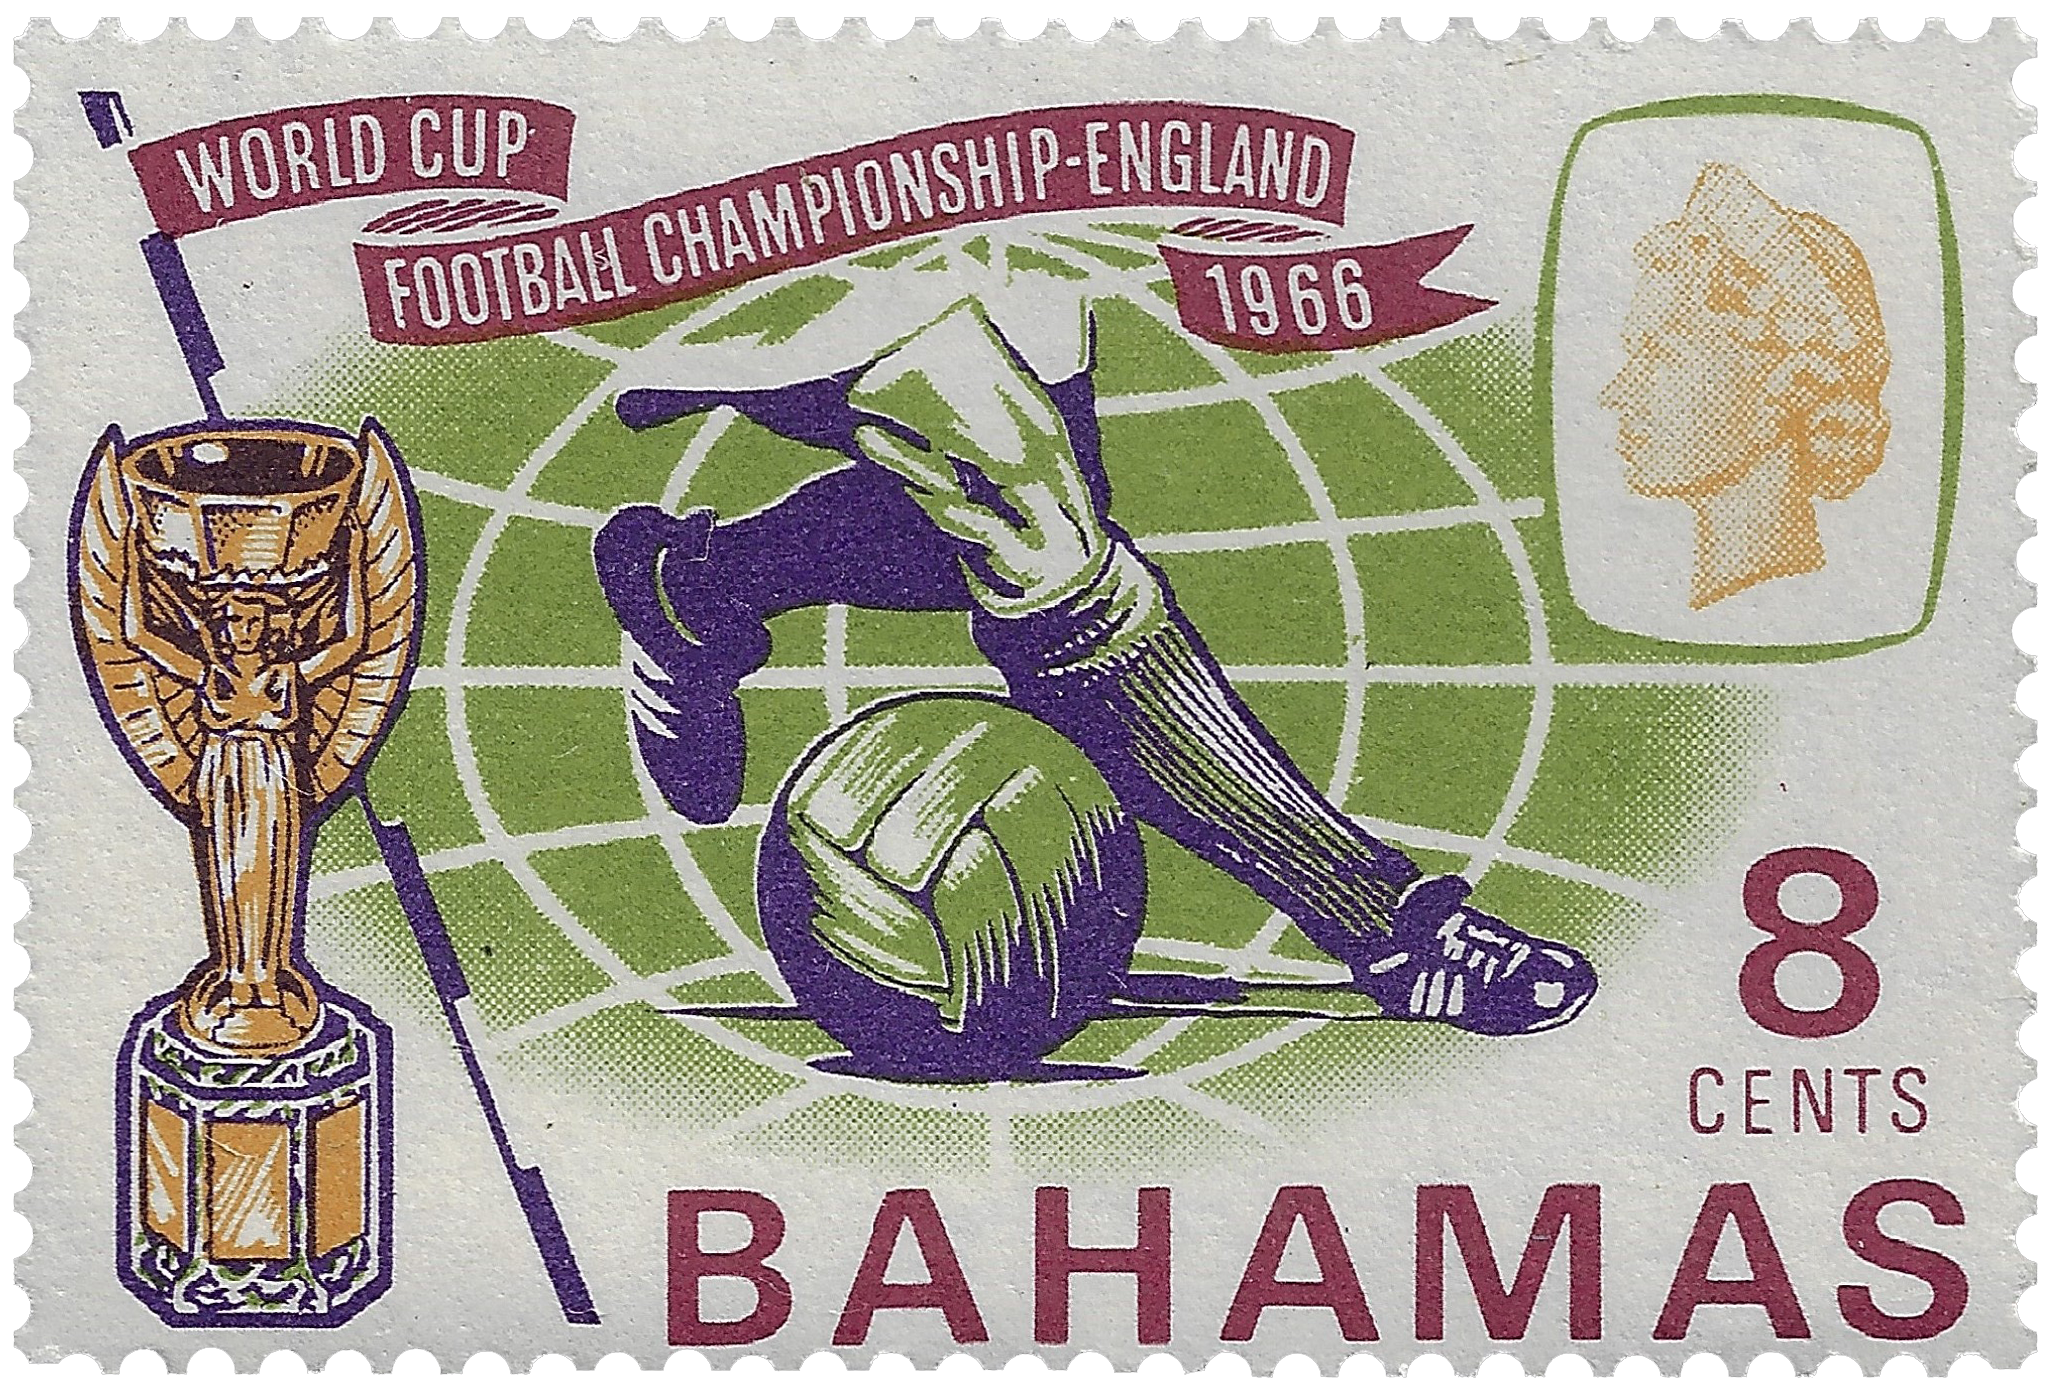 8c 1966, World Cup Football Championship-England